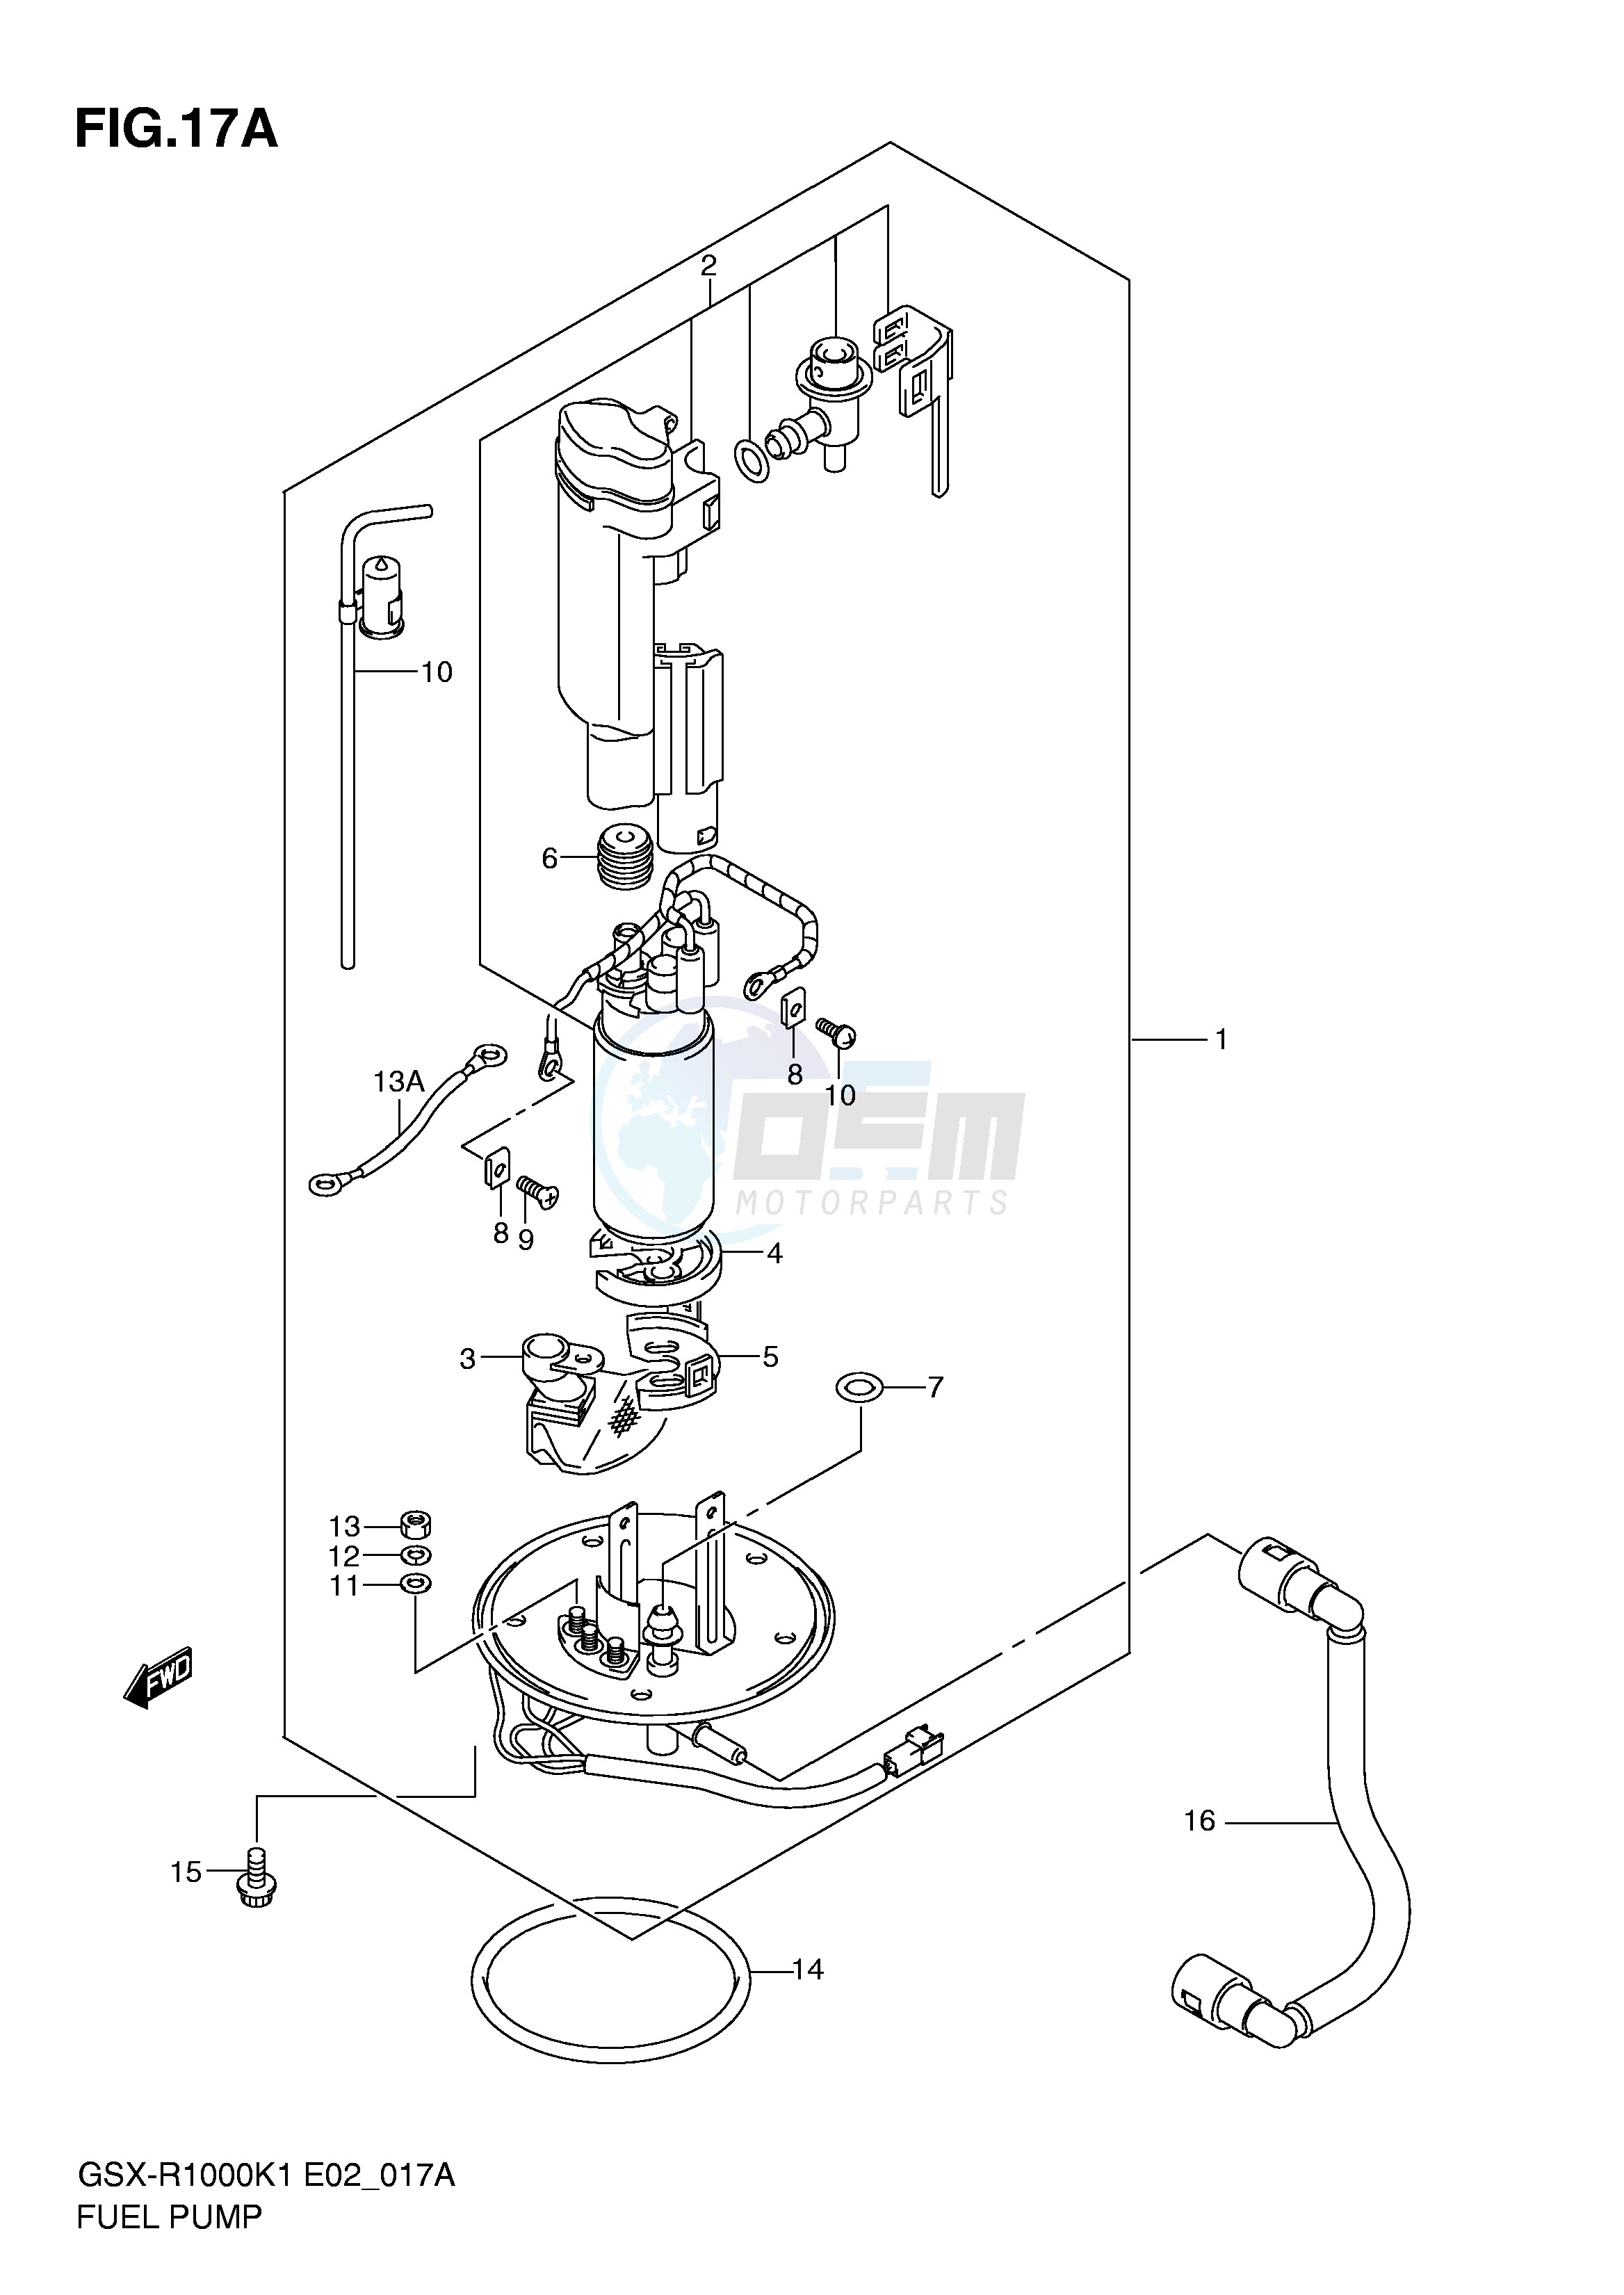 FUEL PUMP (GSX-R1000K2) blueprint